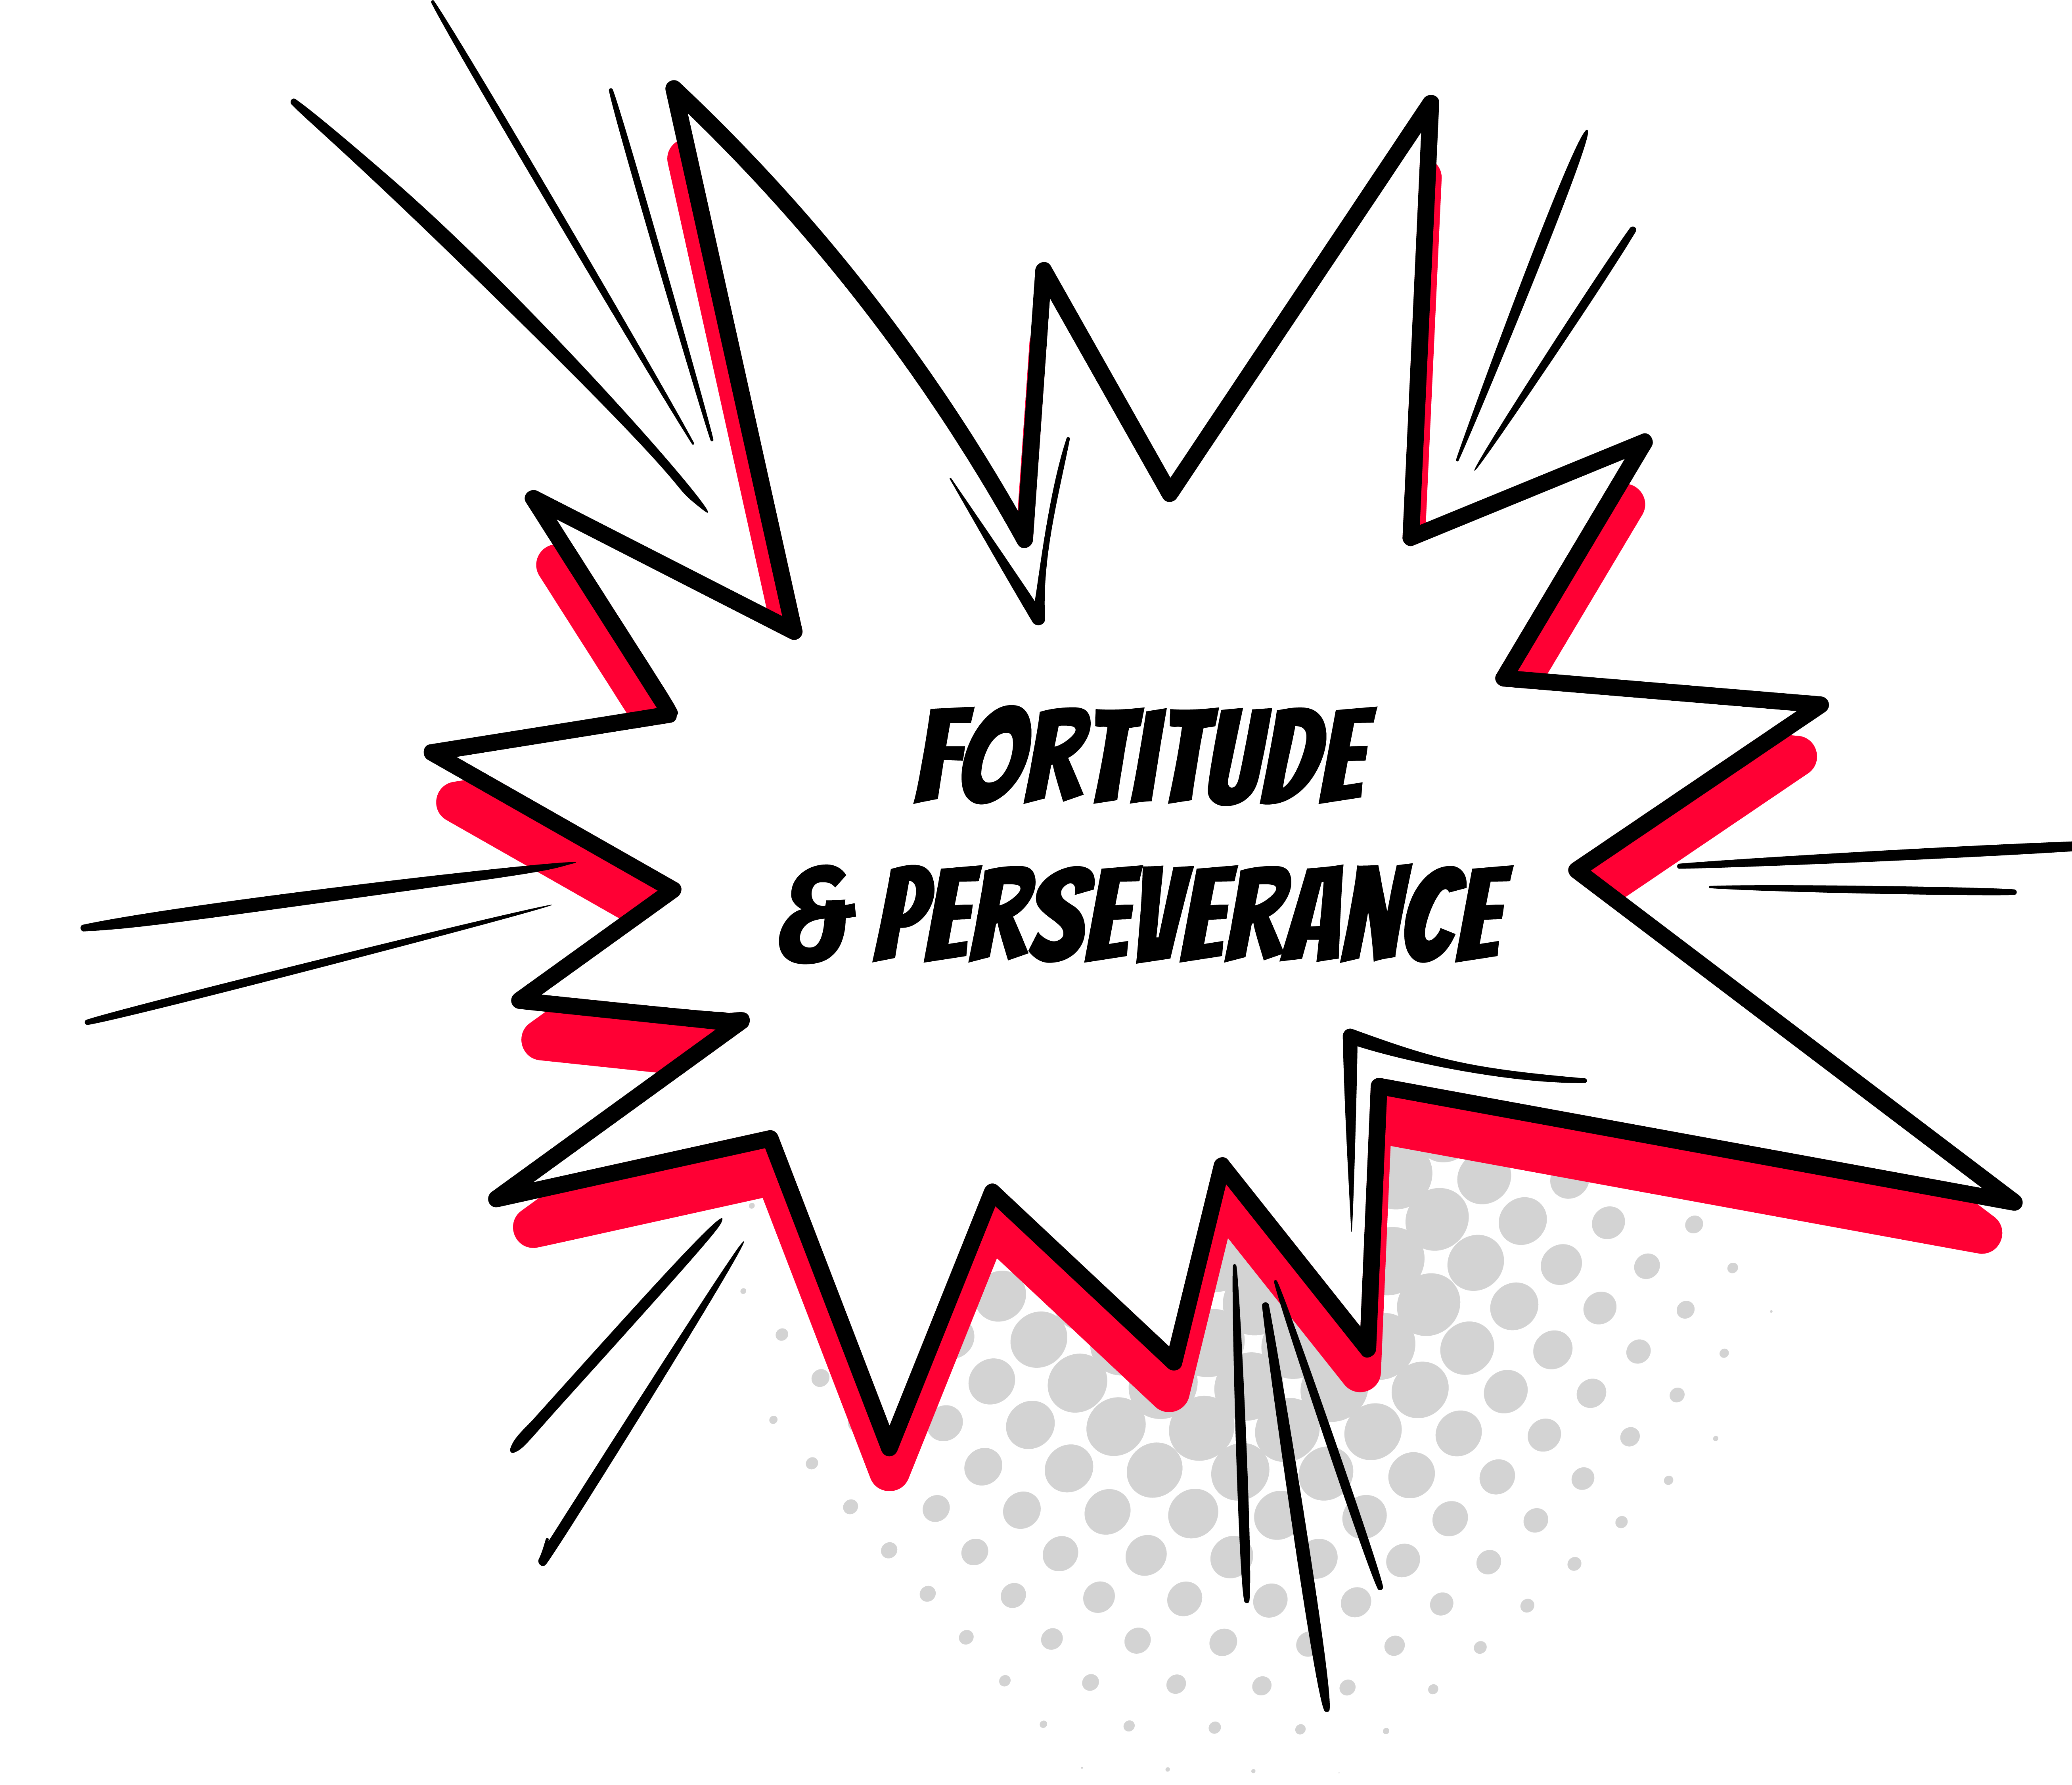 fortitude & perseverance